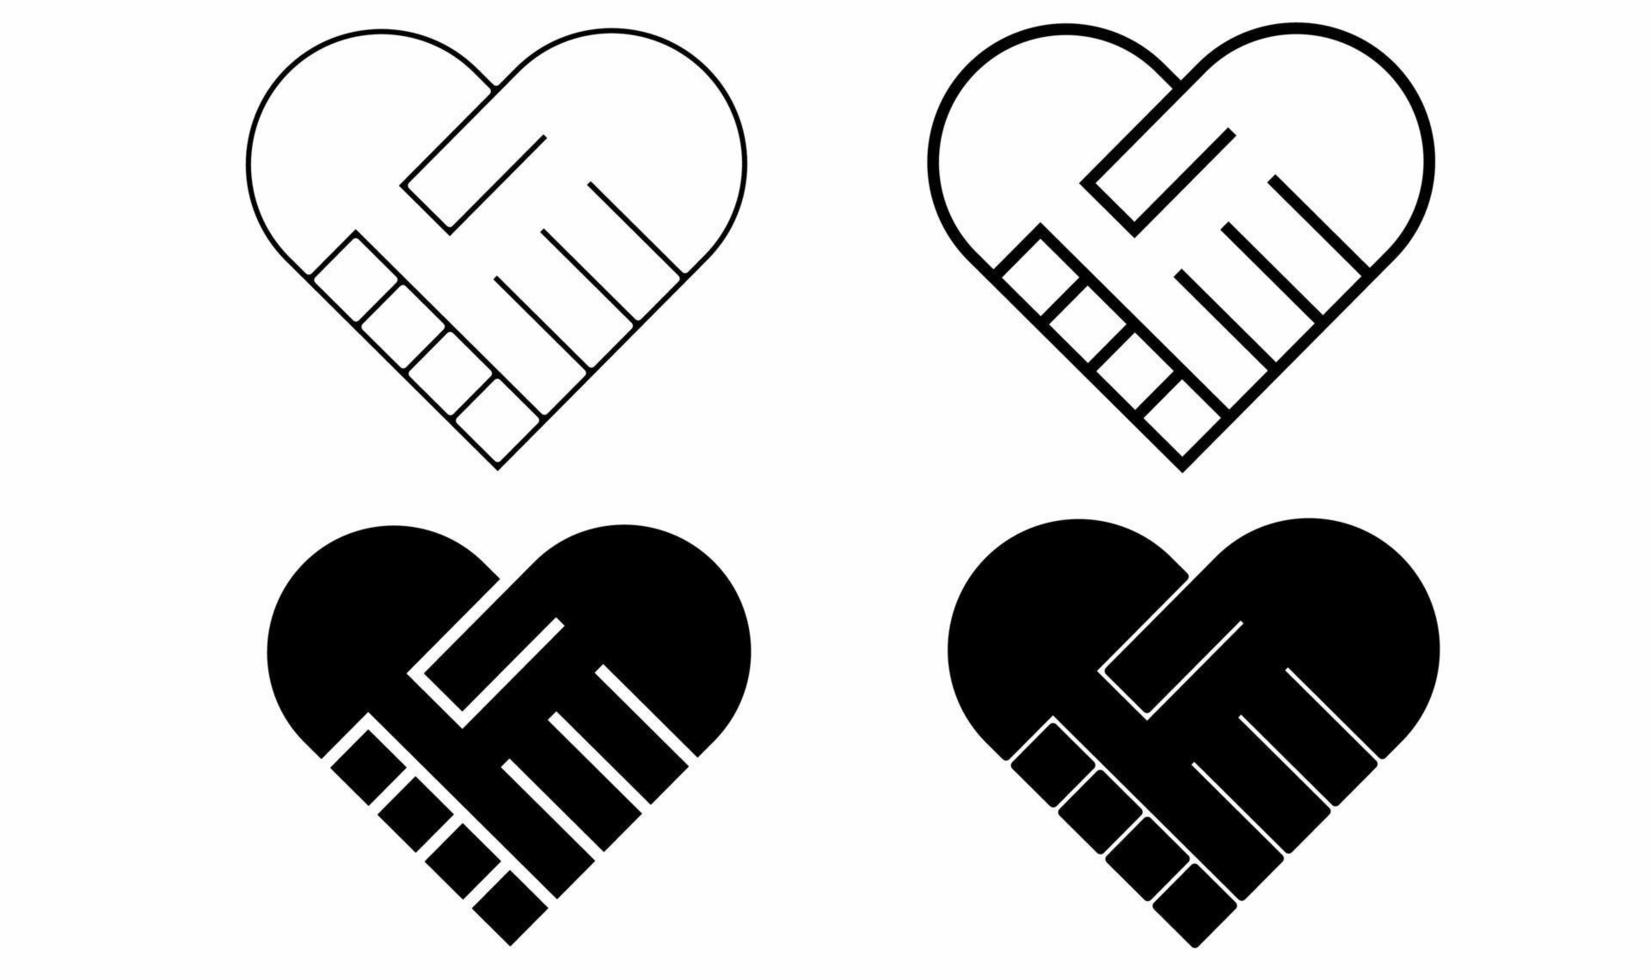 Handshake heart icon set isolated on white background vector